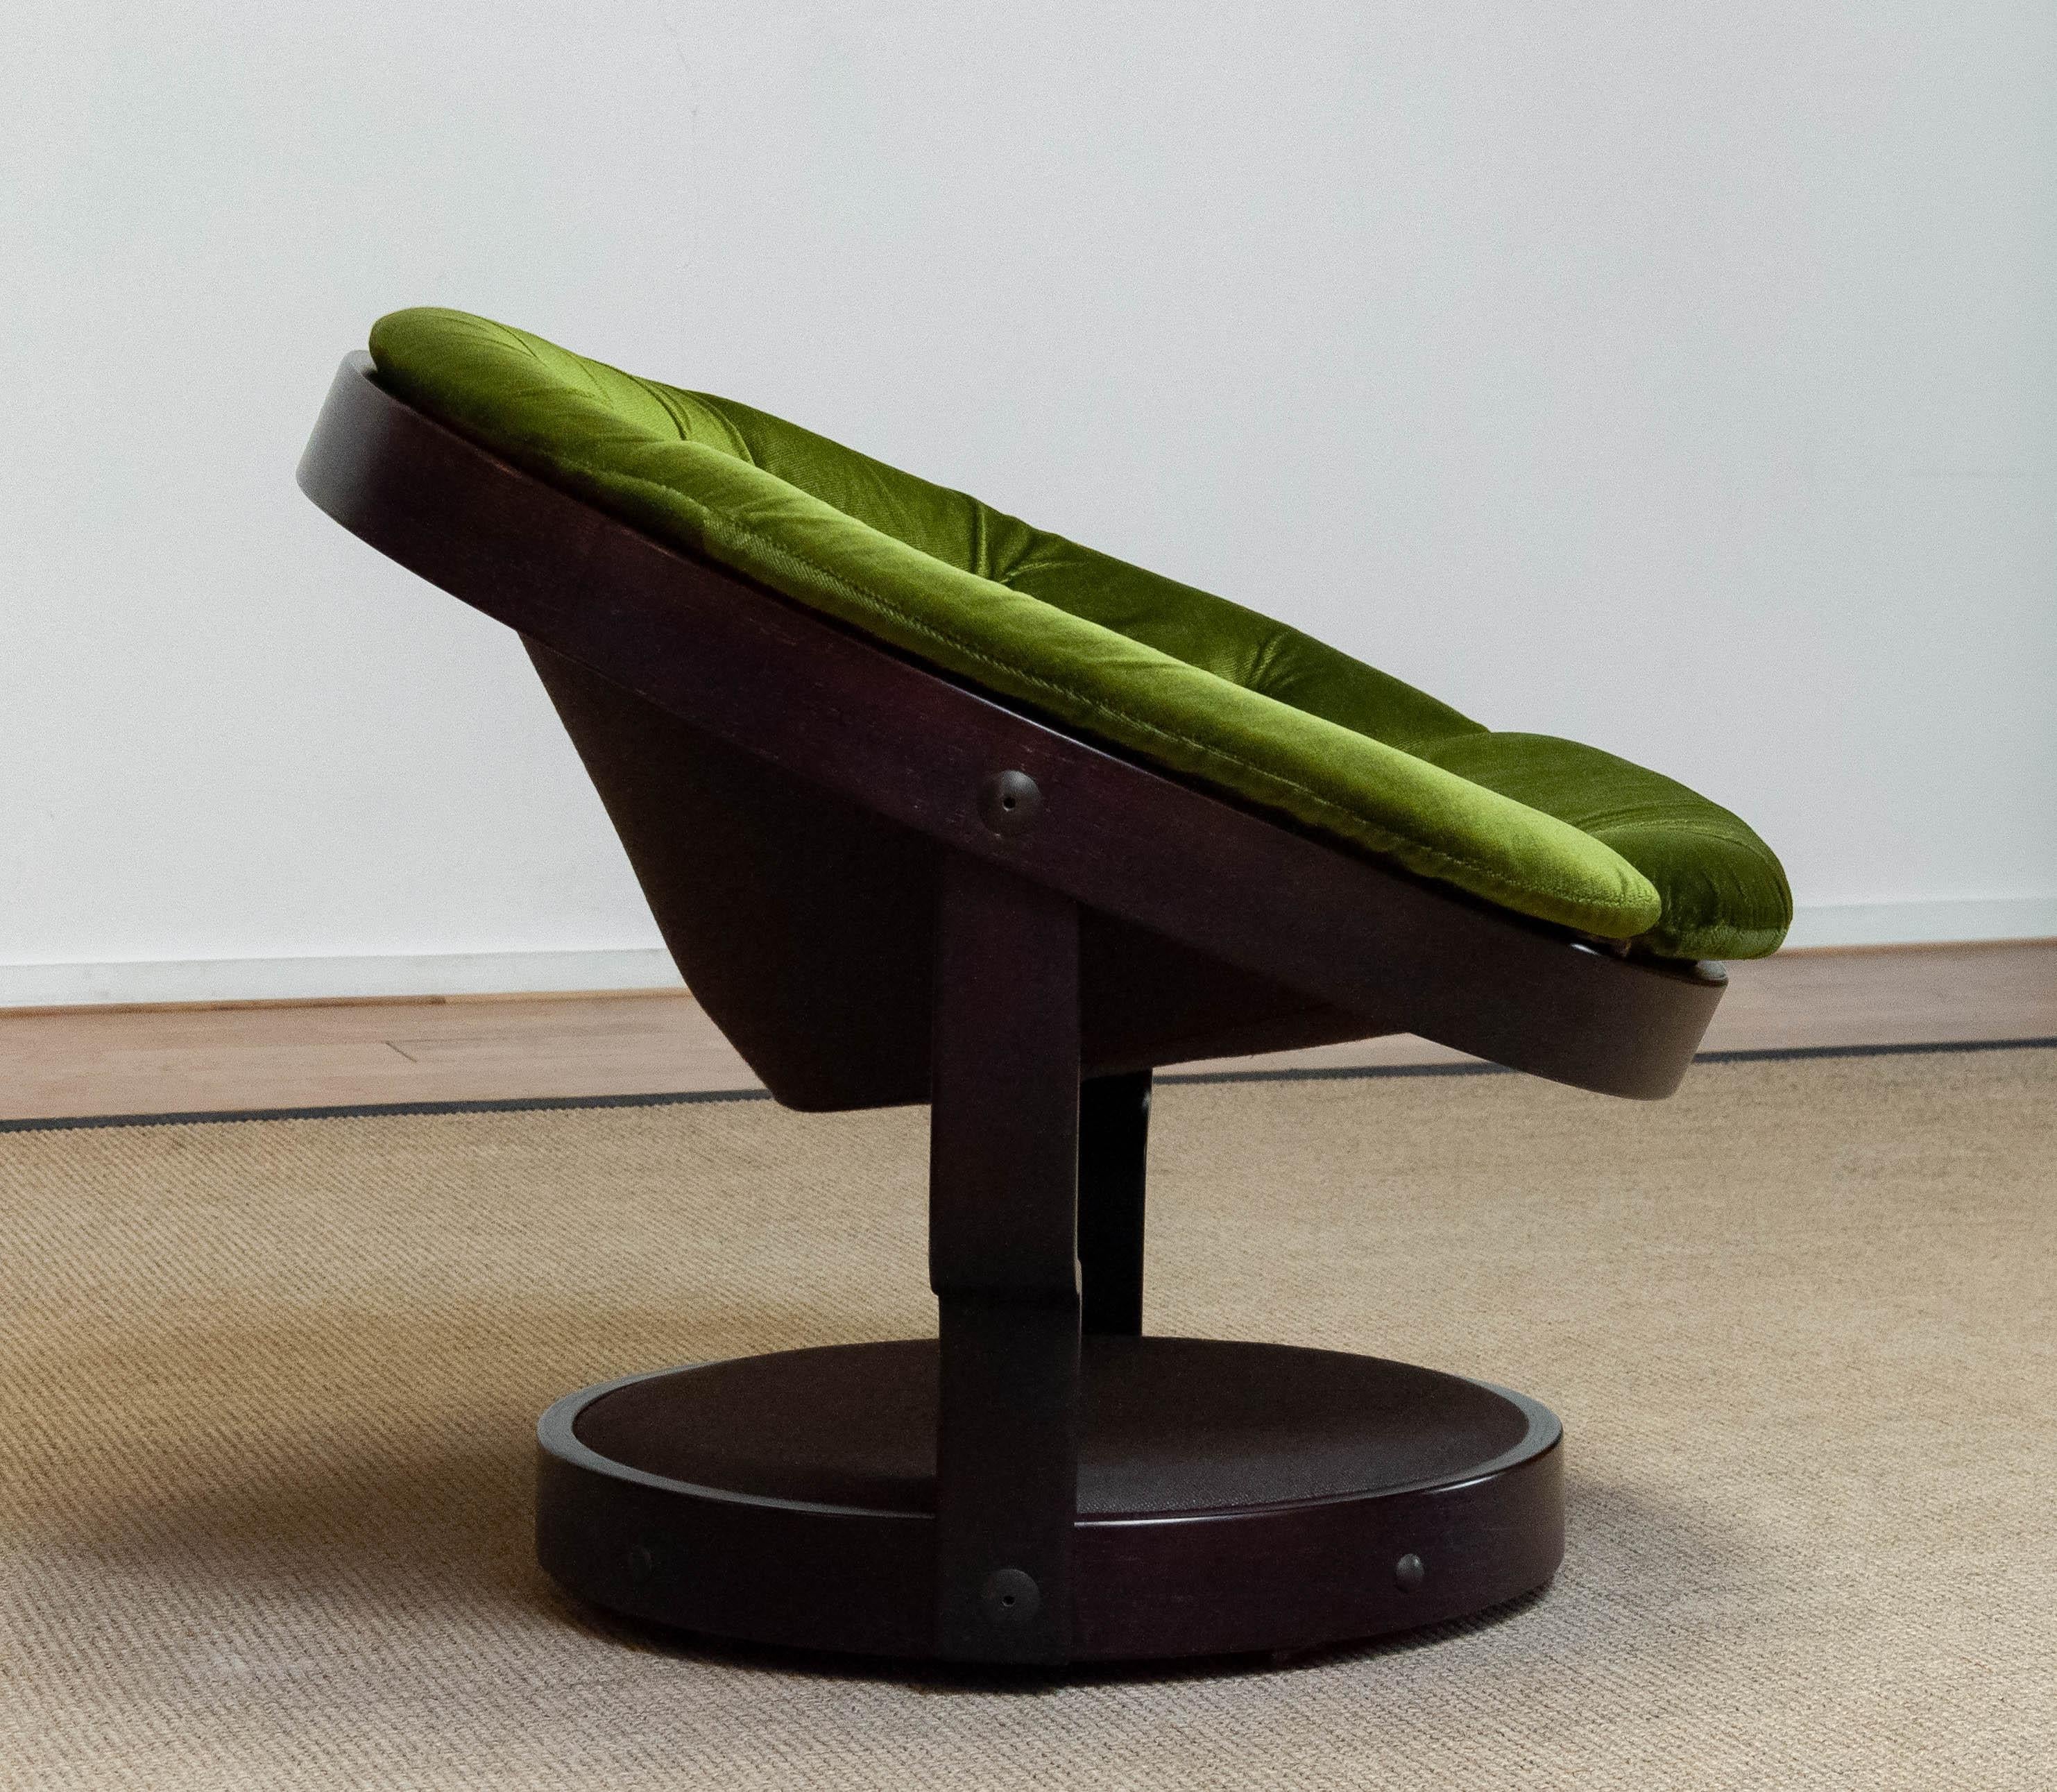 Circular Swivel Lounge Chair Model 'Convair' in Green Velvet by Oddmund Vad In Good Condition For Sale In Silvolde, Gelderland